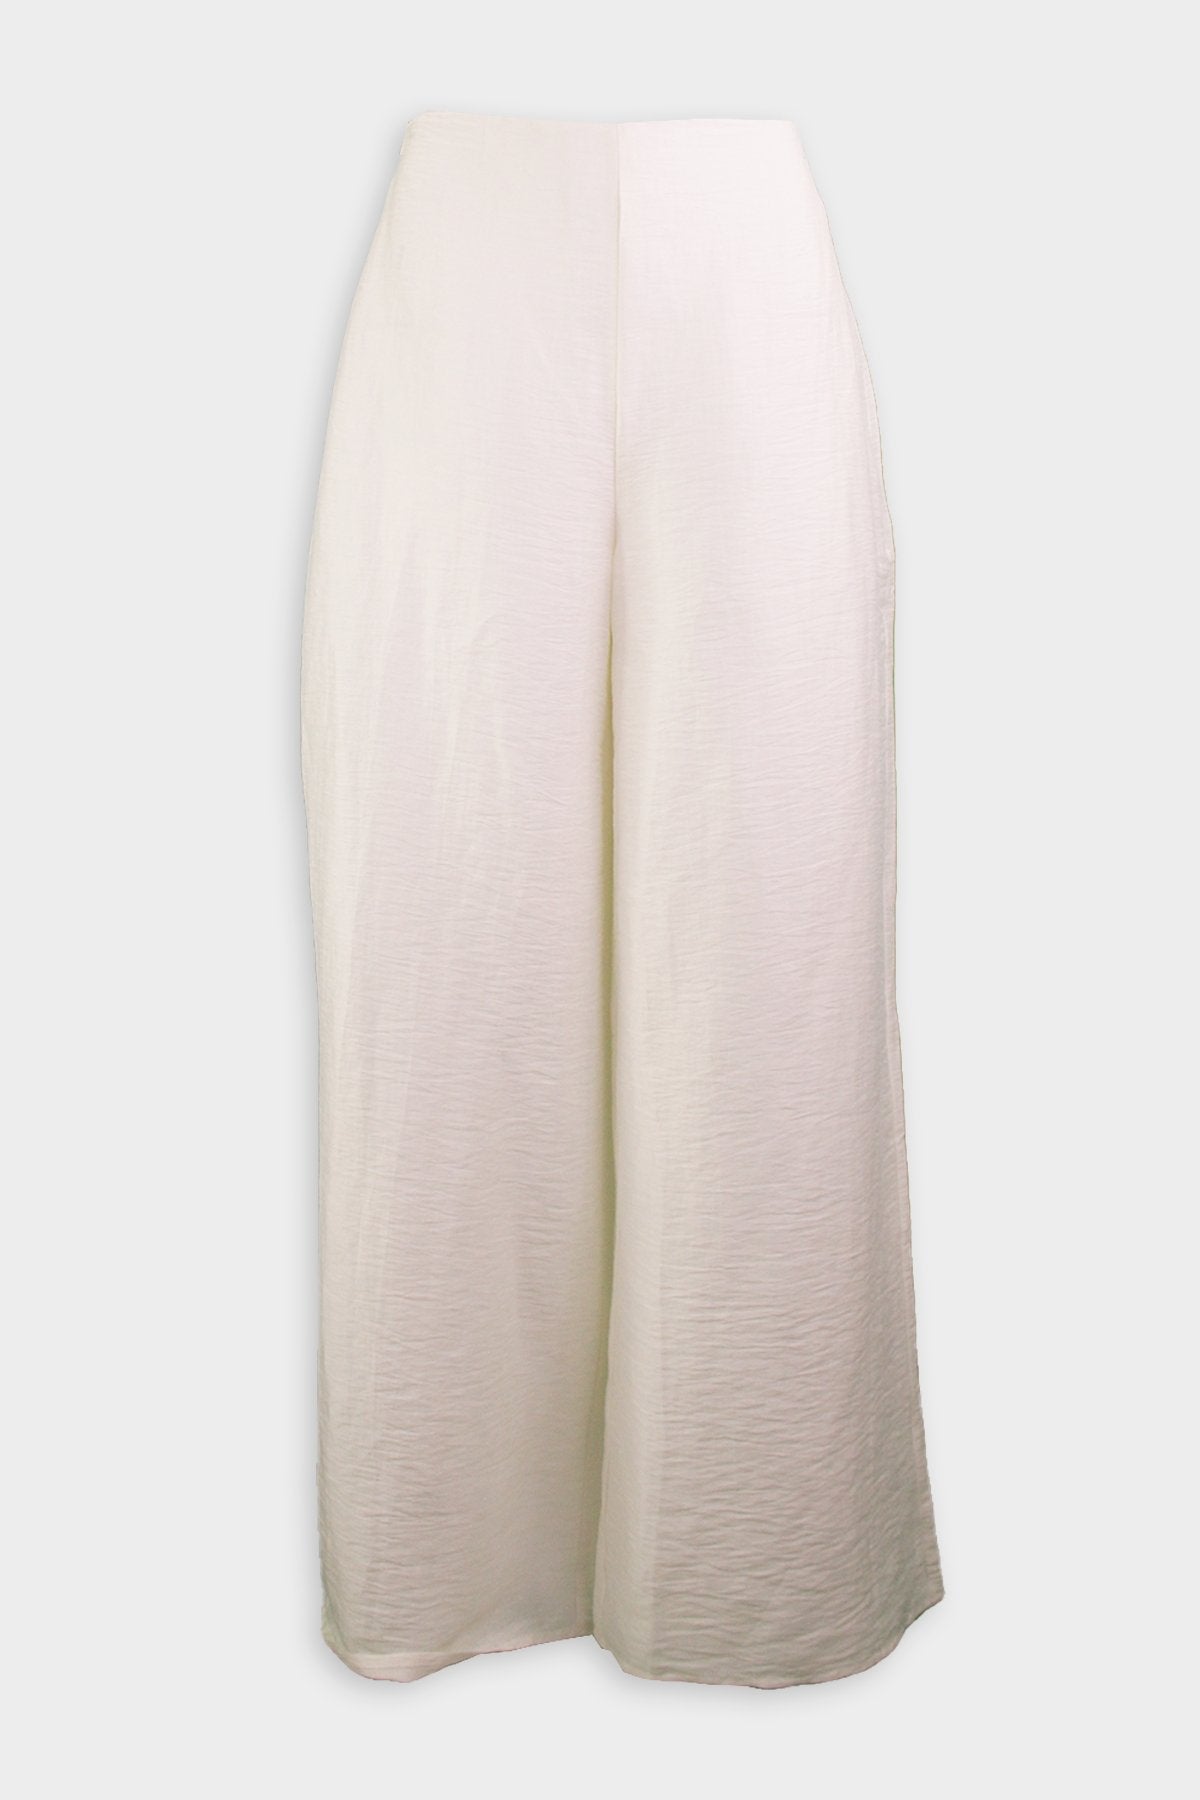 Kora Pant in Off White Linen - shop-olivia.com